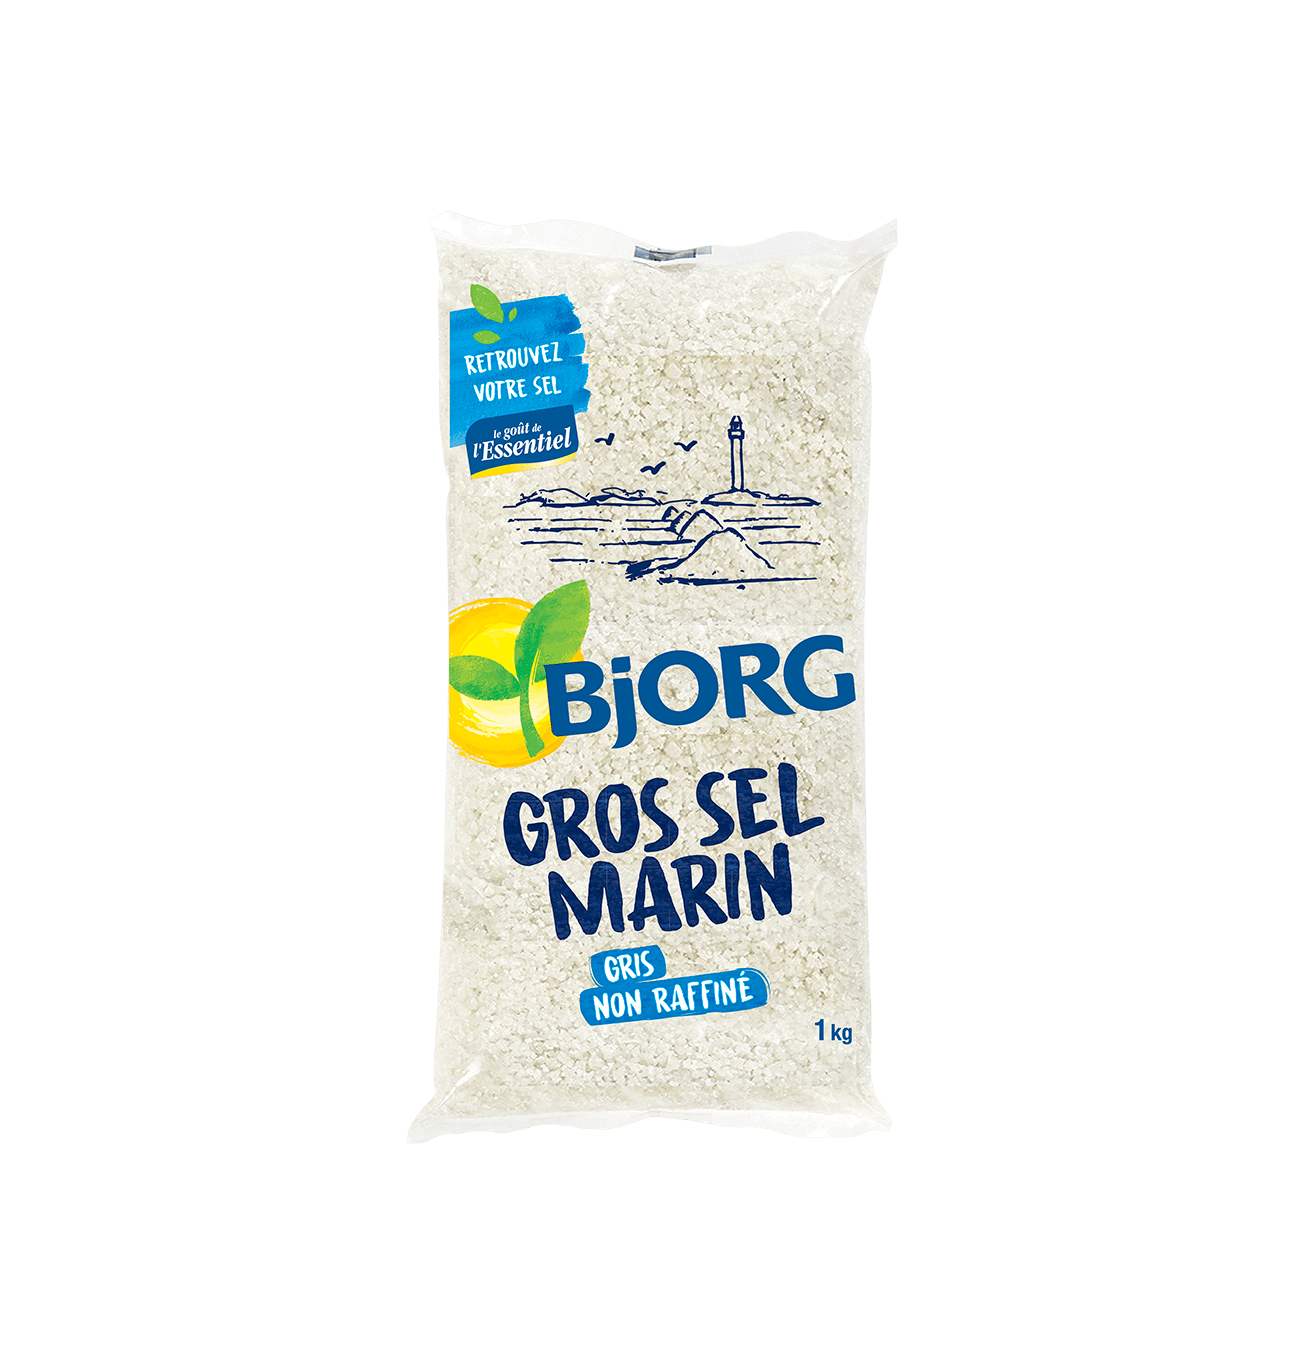 Gros sel marin 1KG - Bjorg